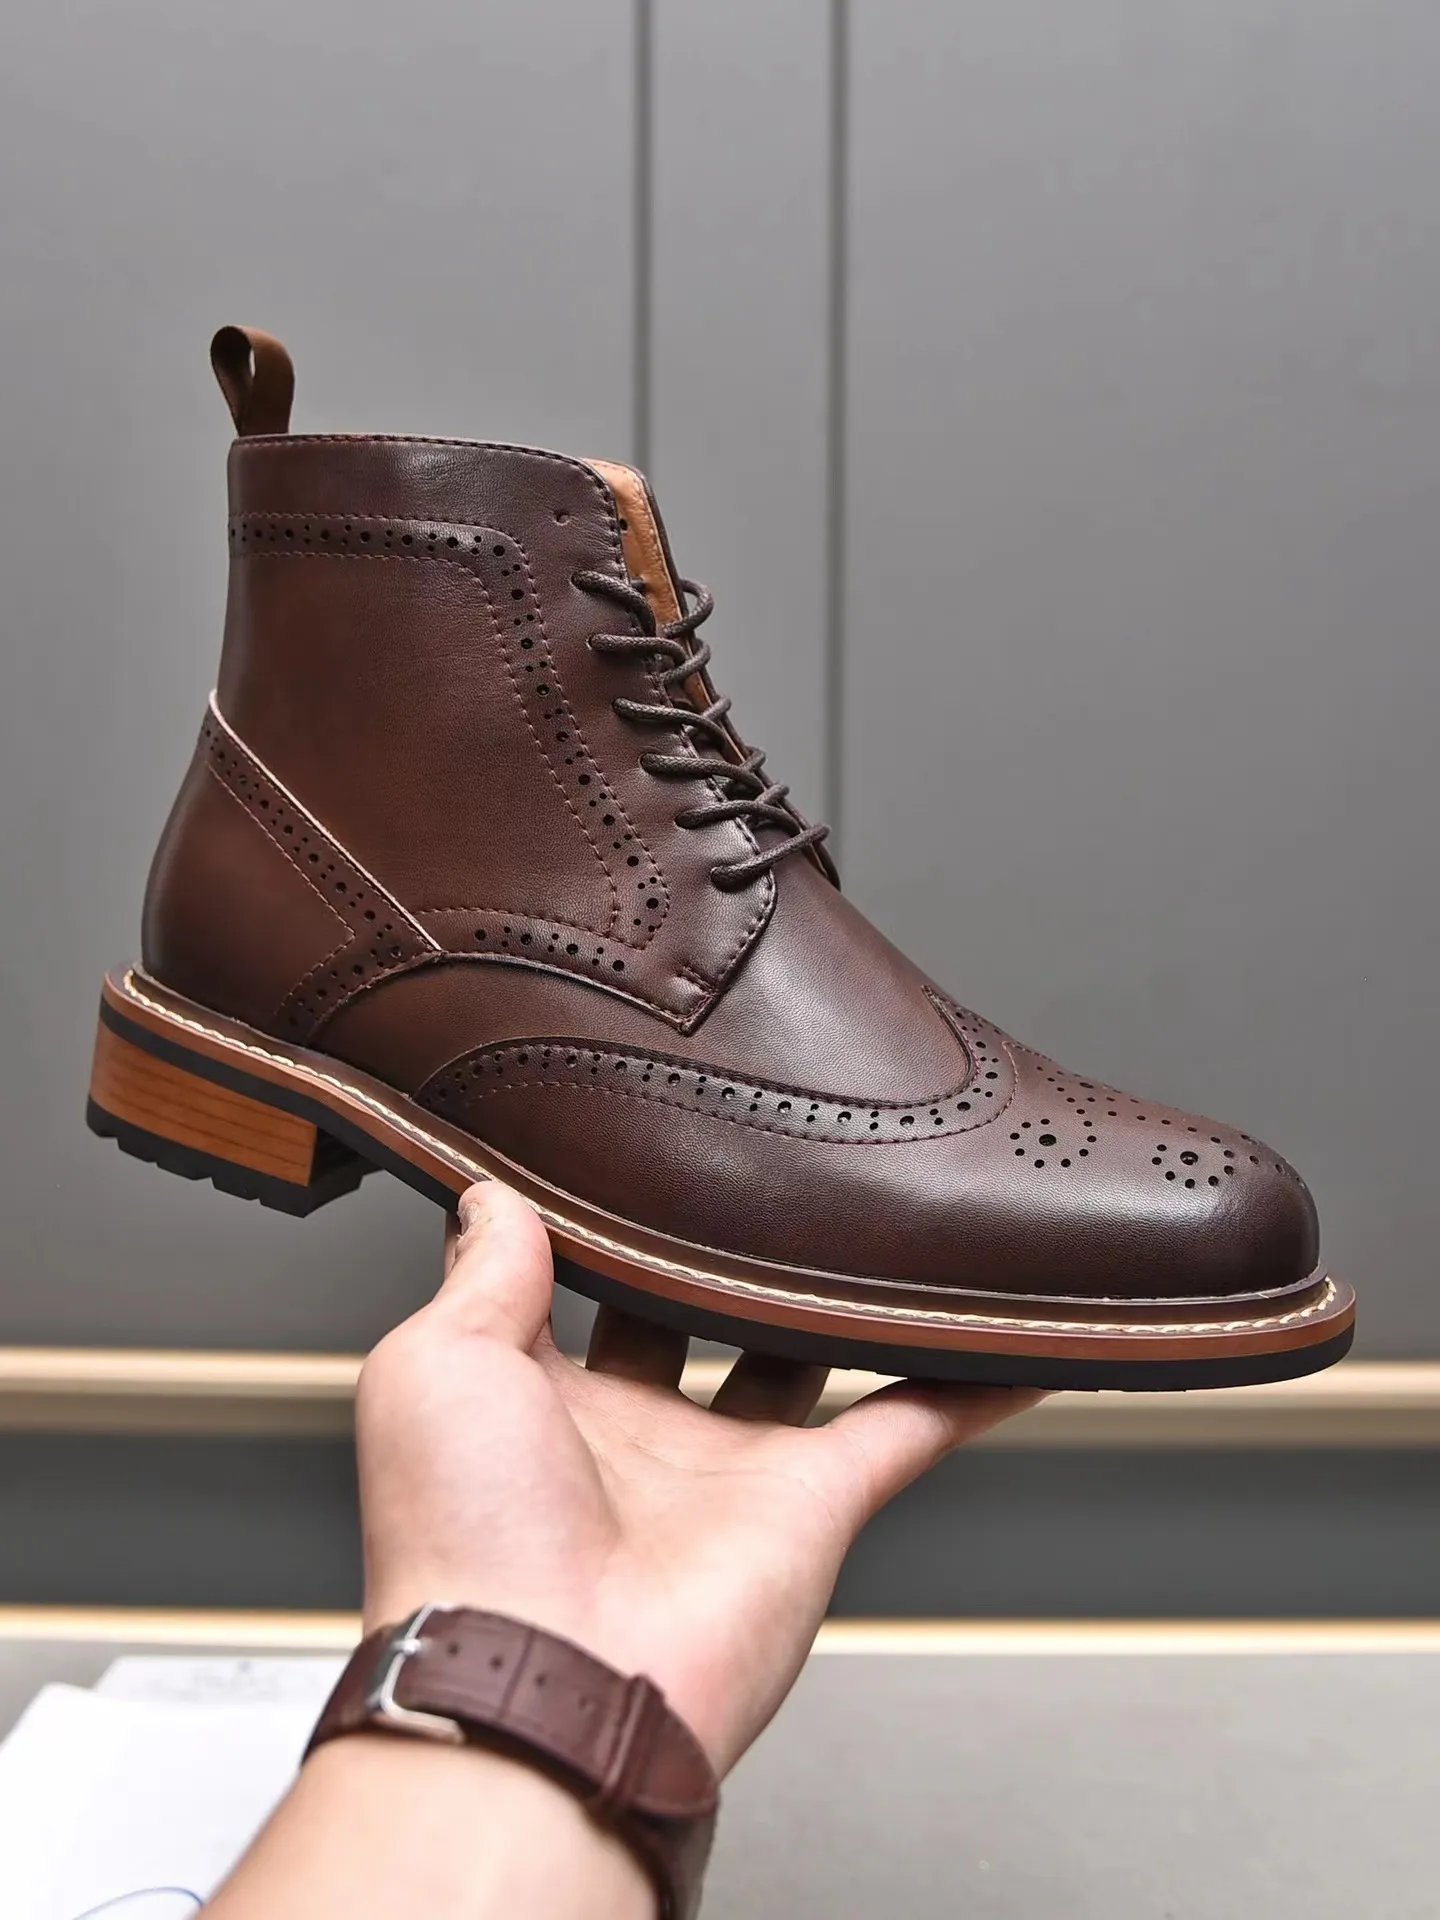 Block Stivali da uomo Casual Business ChelseaBoots Designer Luxury Carved LeatherBoots Scarpe in pelle britannica